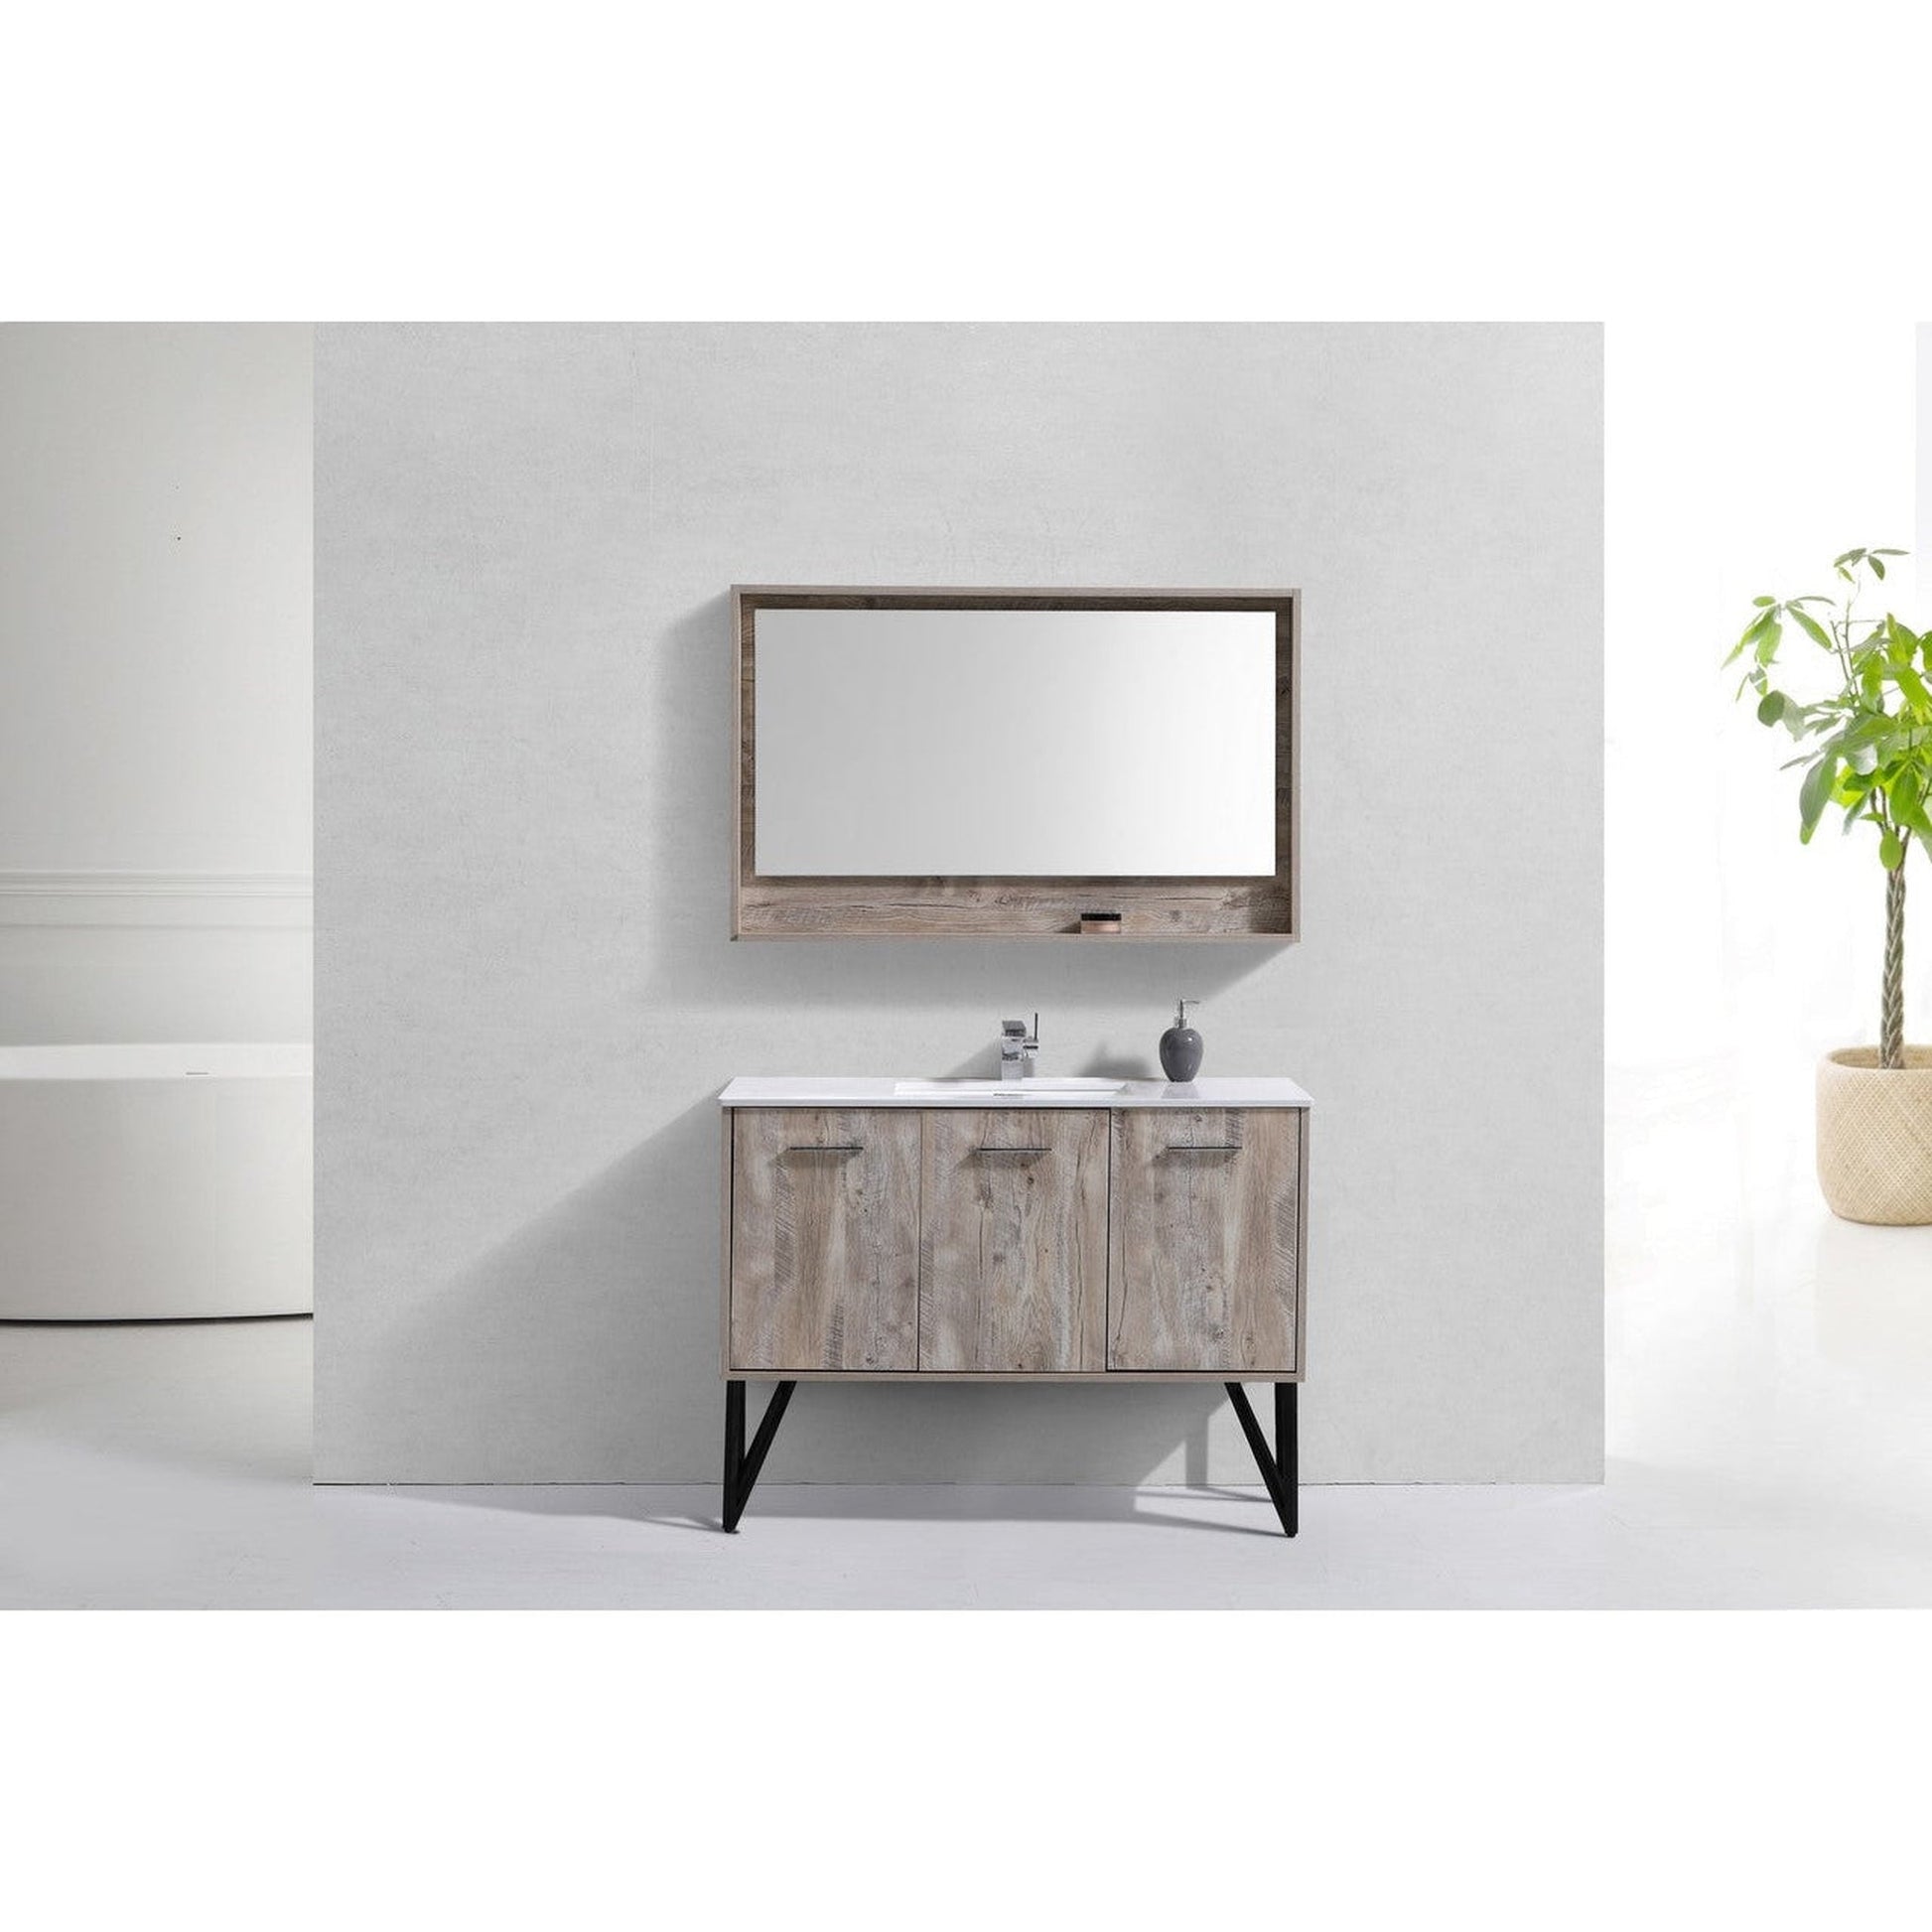 KubeBath Bosco 48" Nature Wood Modern Freestanding Bathroom Vanity With Single Undermount Sink With Overflow and 48" Nature Wood Framed Mirror